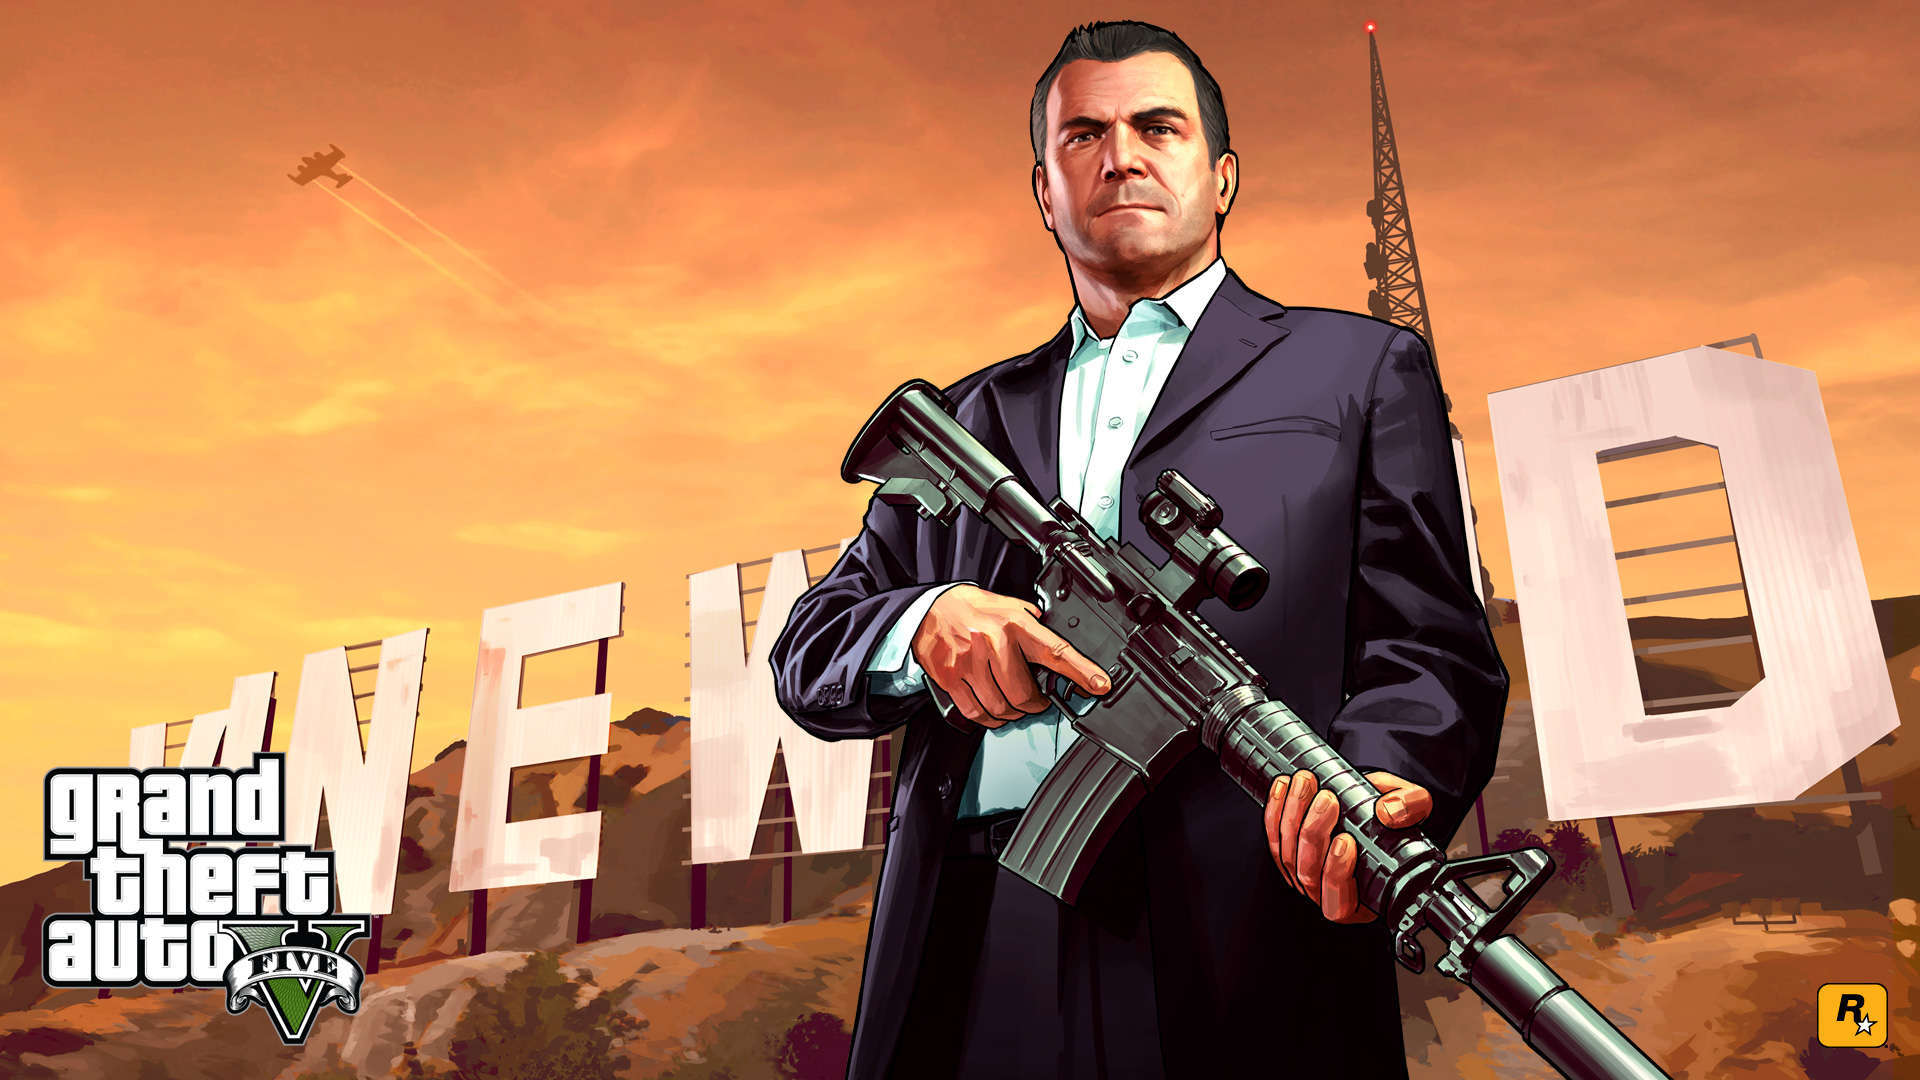 Wallpaper Grand Theft Auto V HD Upload At October